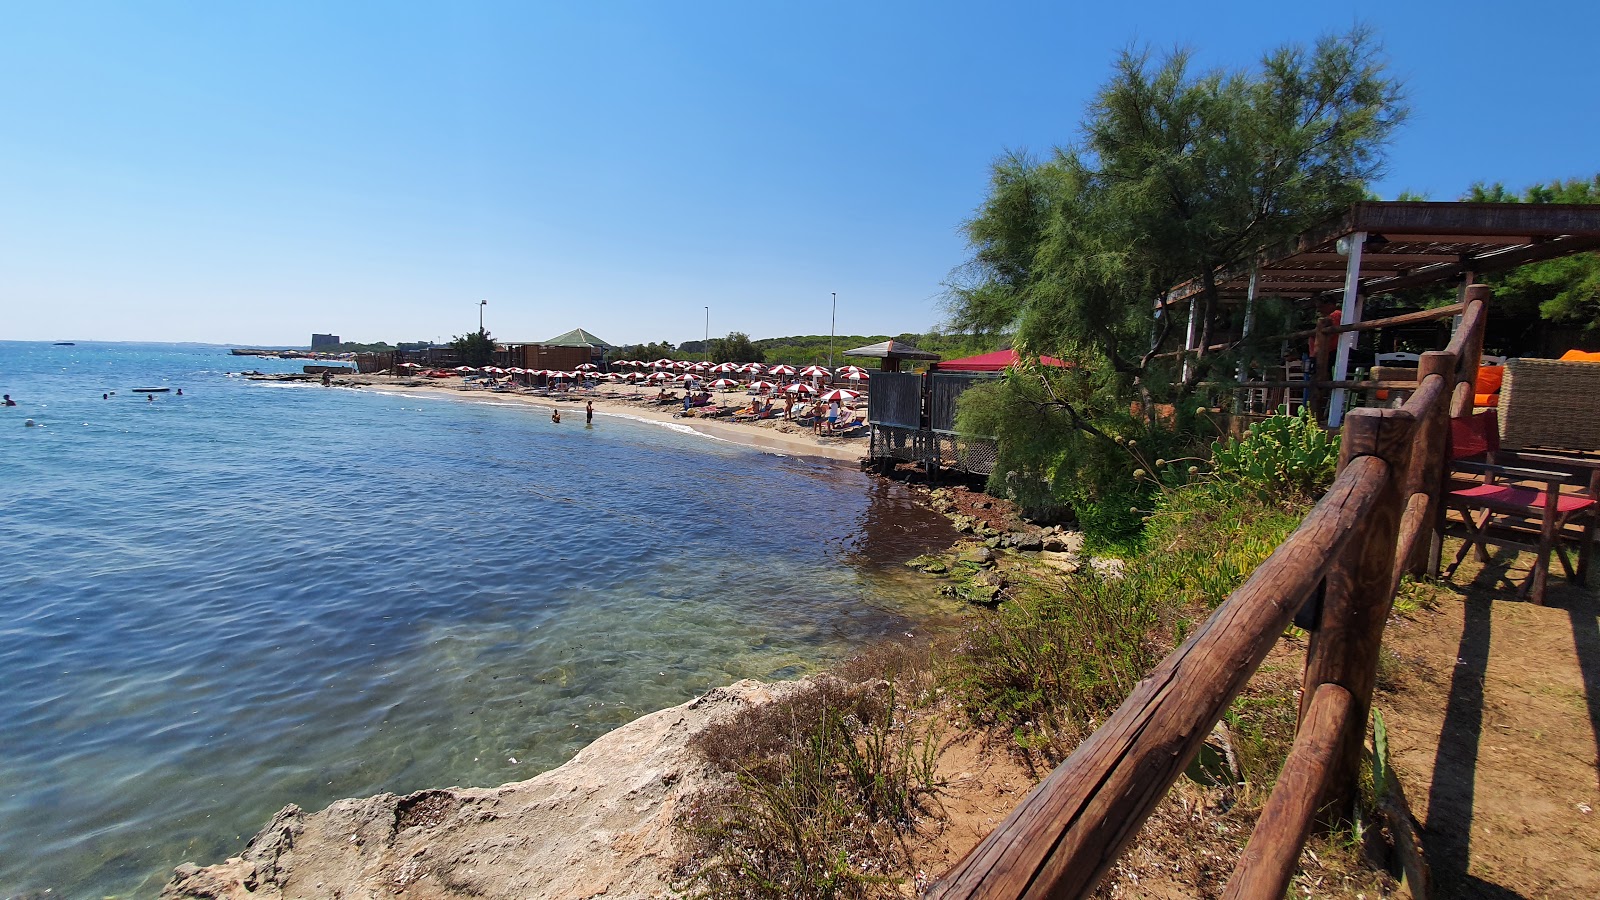 Spiaggia di Torre Specchia'in fotoğrafı mavi saf su yüzey ile